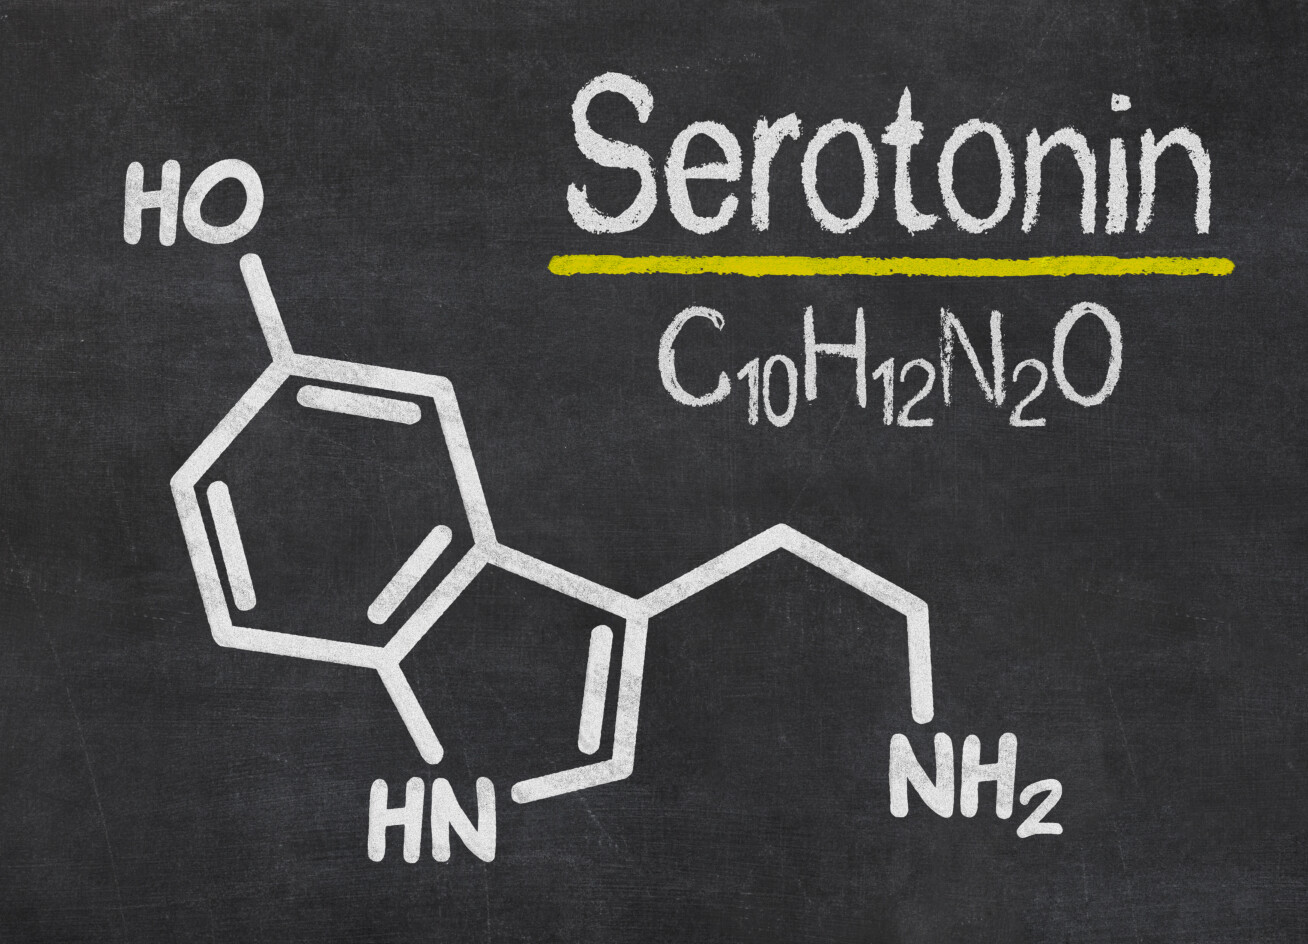 A blackboard with the serotonin molecule drawn on it